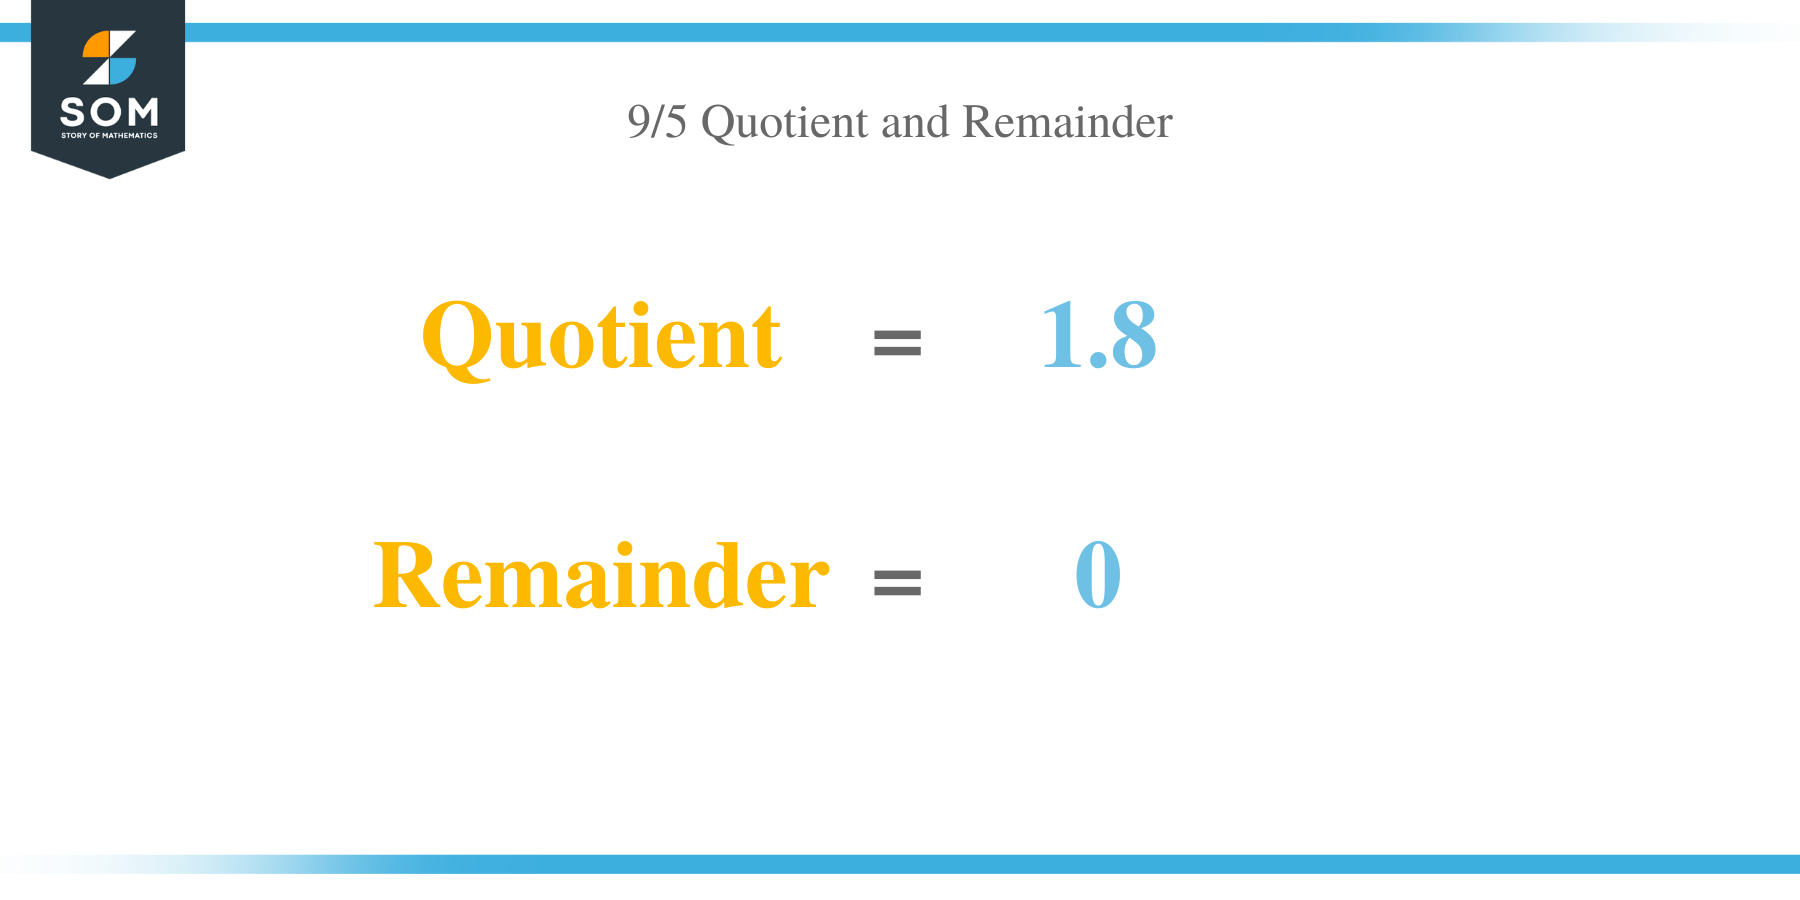 Quotient and remainder of 9 per 5